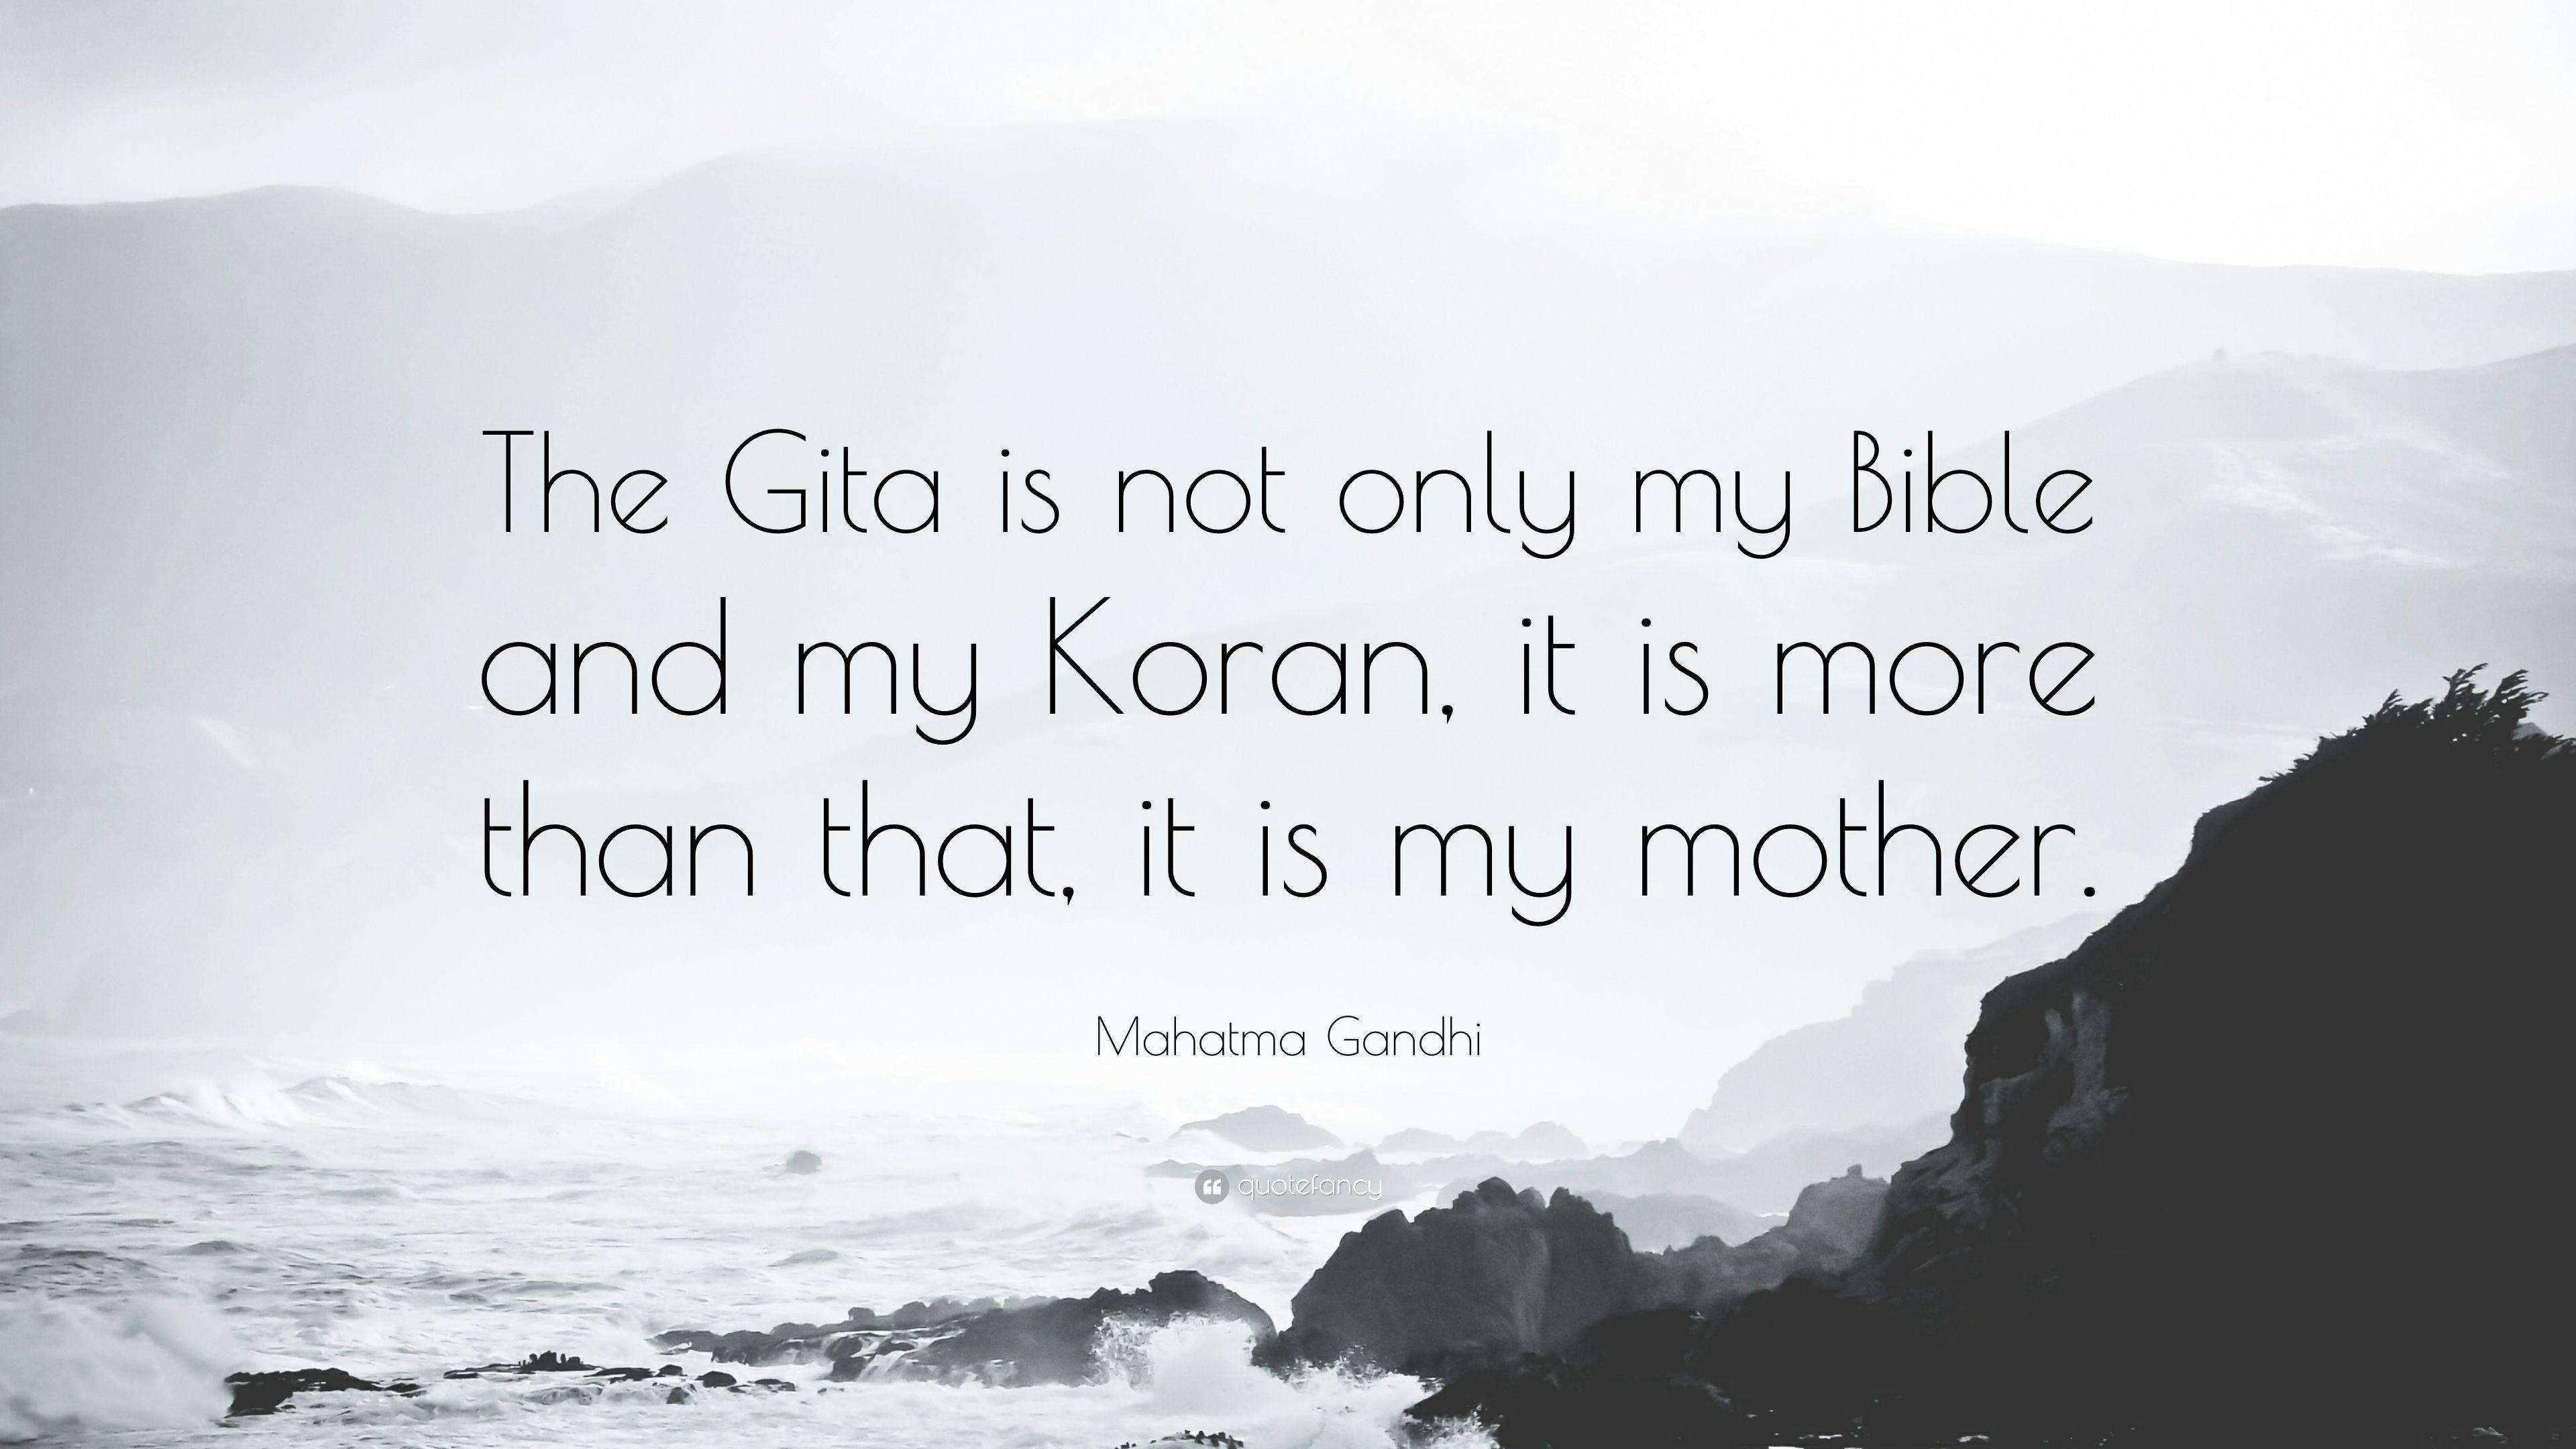 Mahatma Gandhi Quote: “The Gita is not only my Bible and my Koran